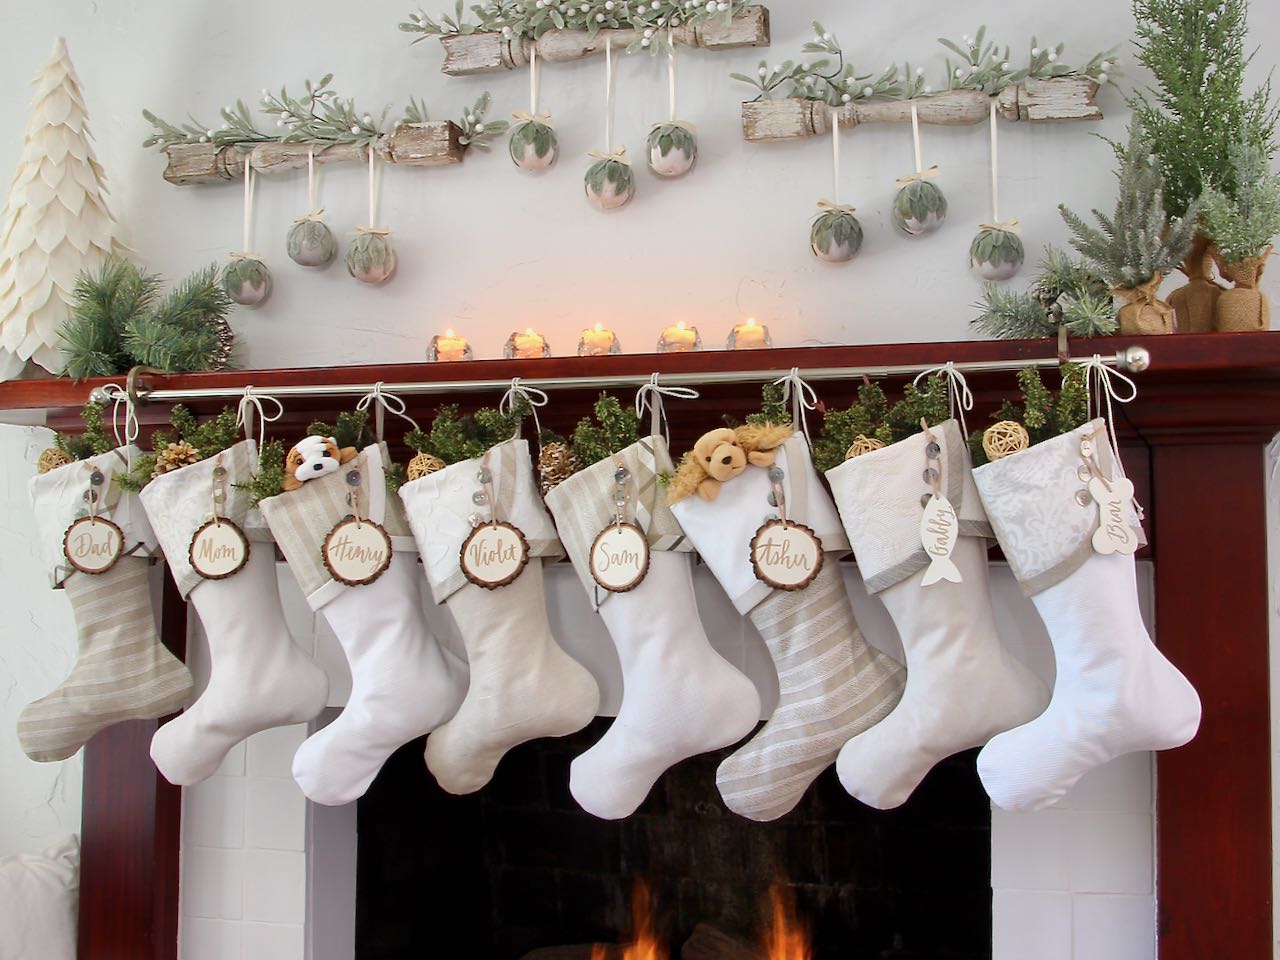 set of 8 modern farmhouse Christmas stockings with white tree slice name tags